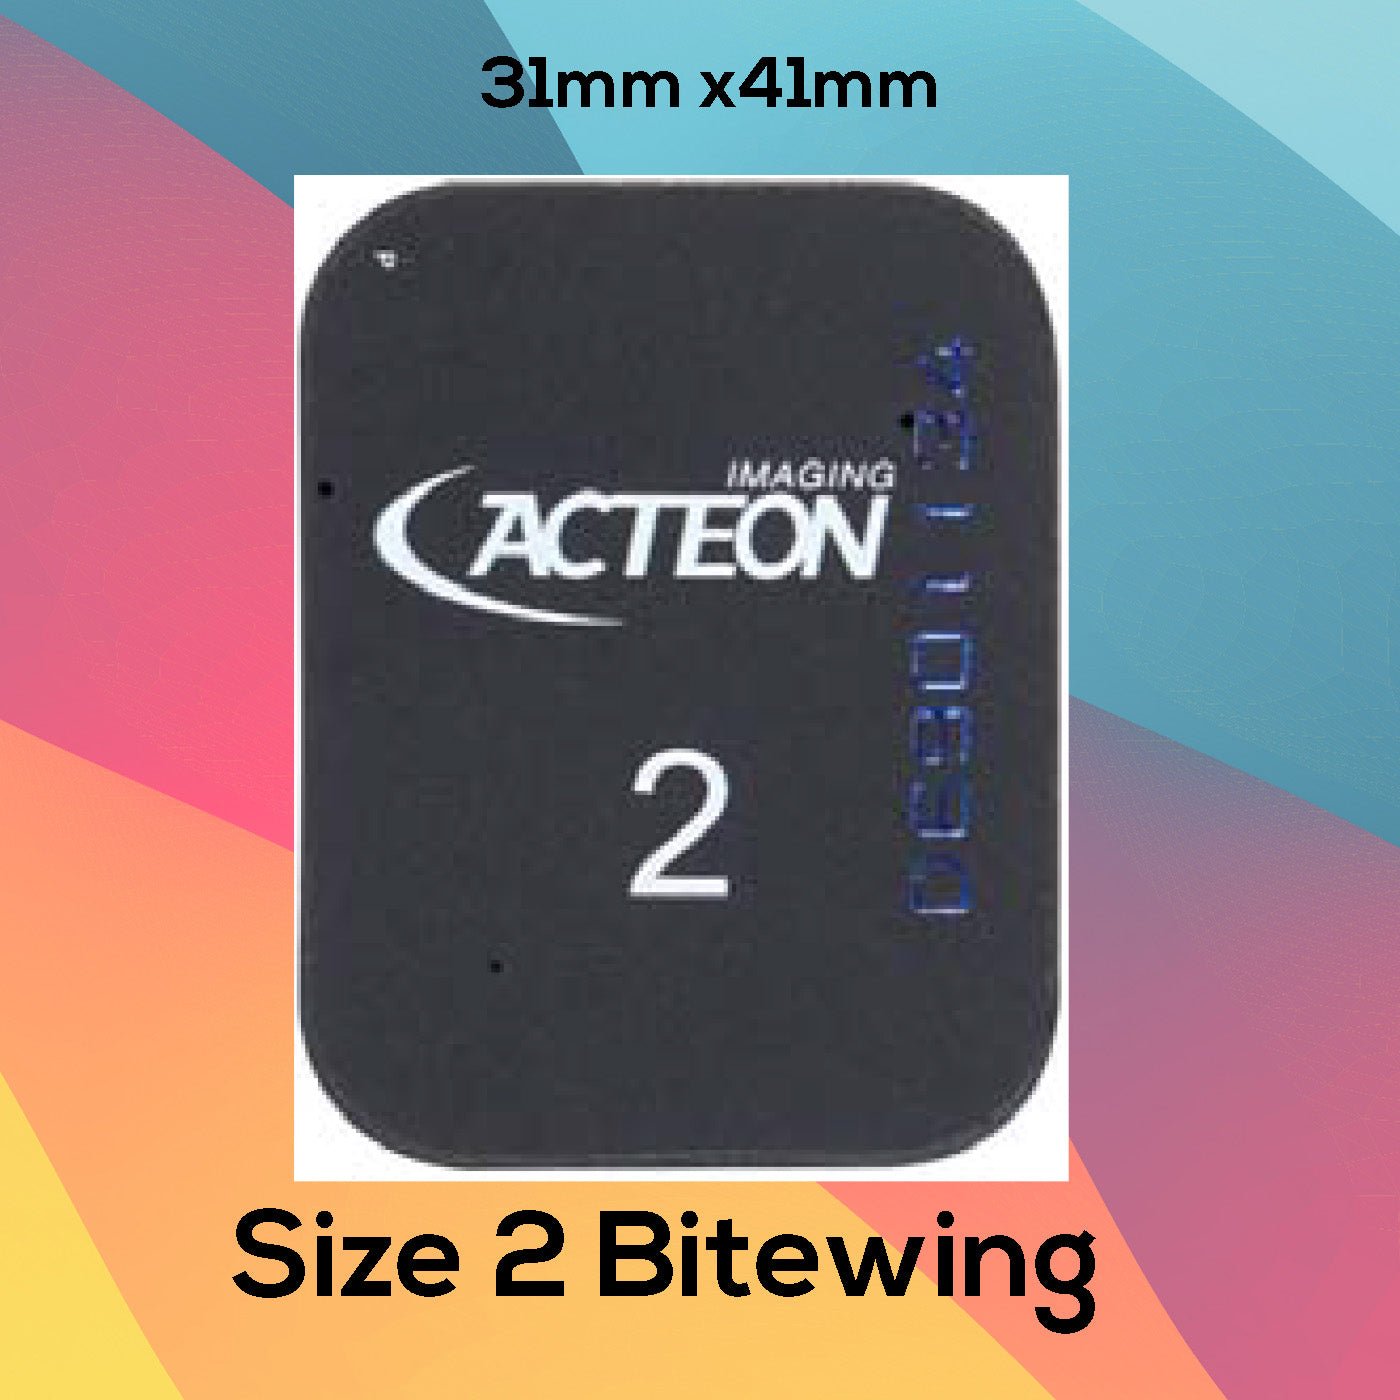 
                  
                    Acteon PSPIX²® Phosphor Plate Digital Intra Oral Xray Scanner - 360visualise
                  
                